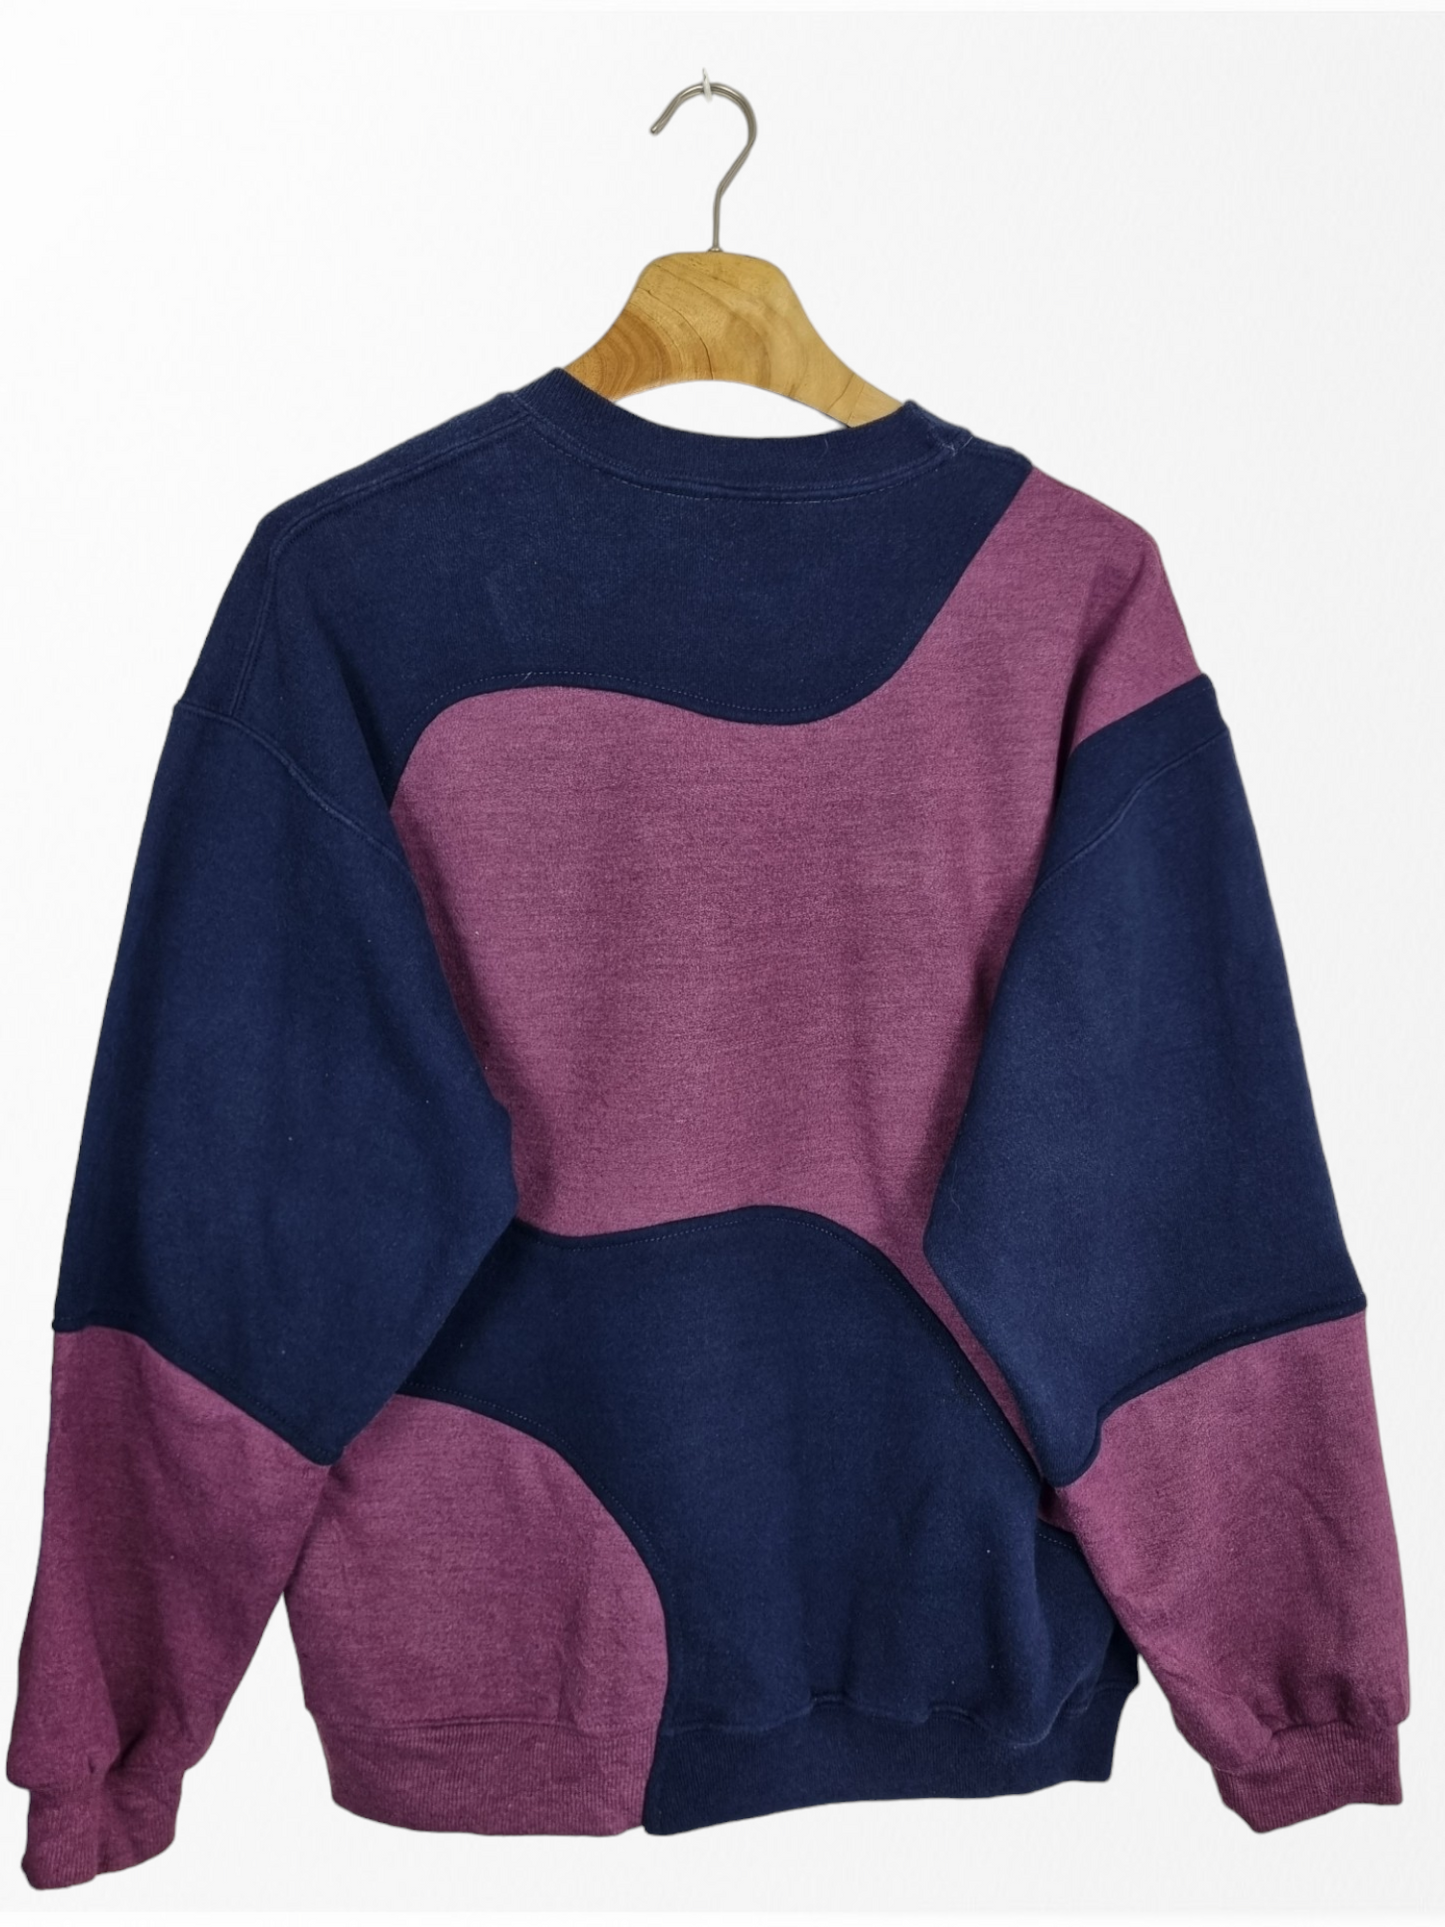 Carhartt sweater maat M